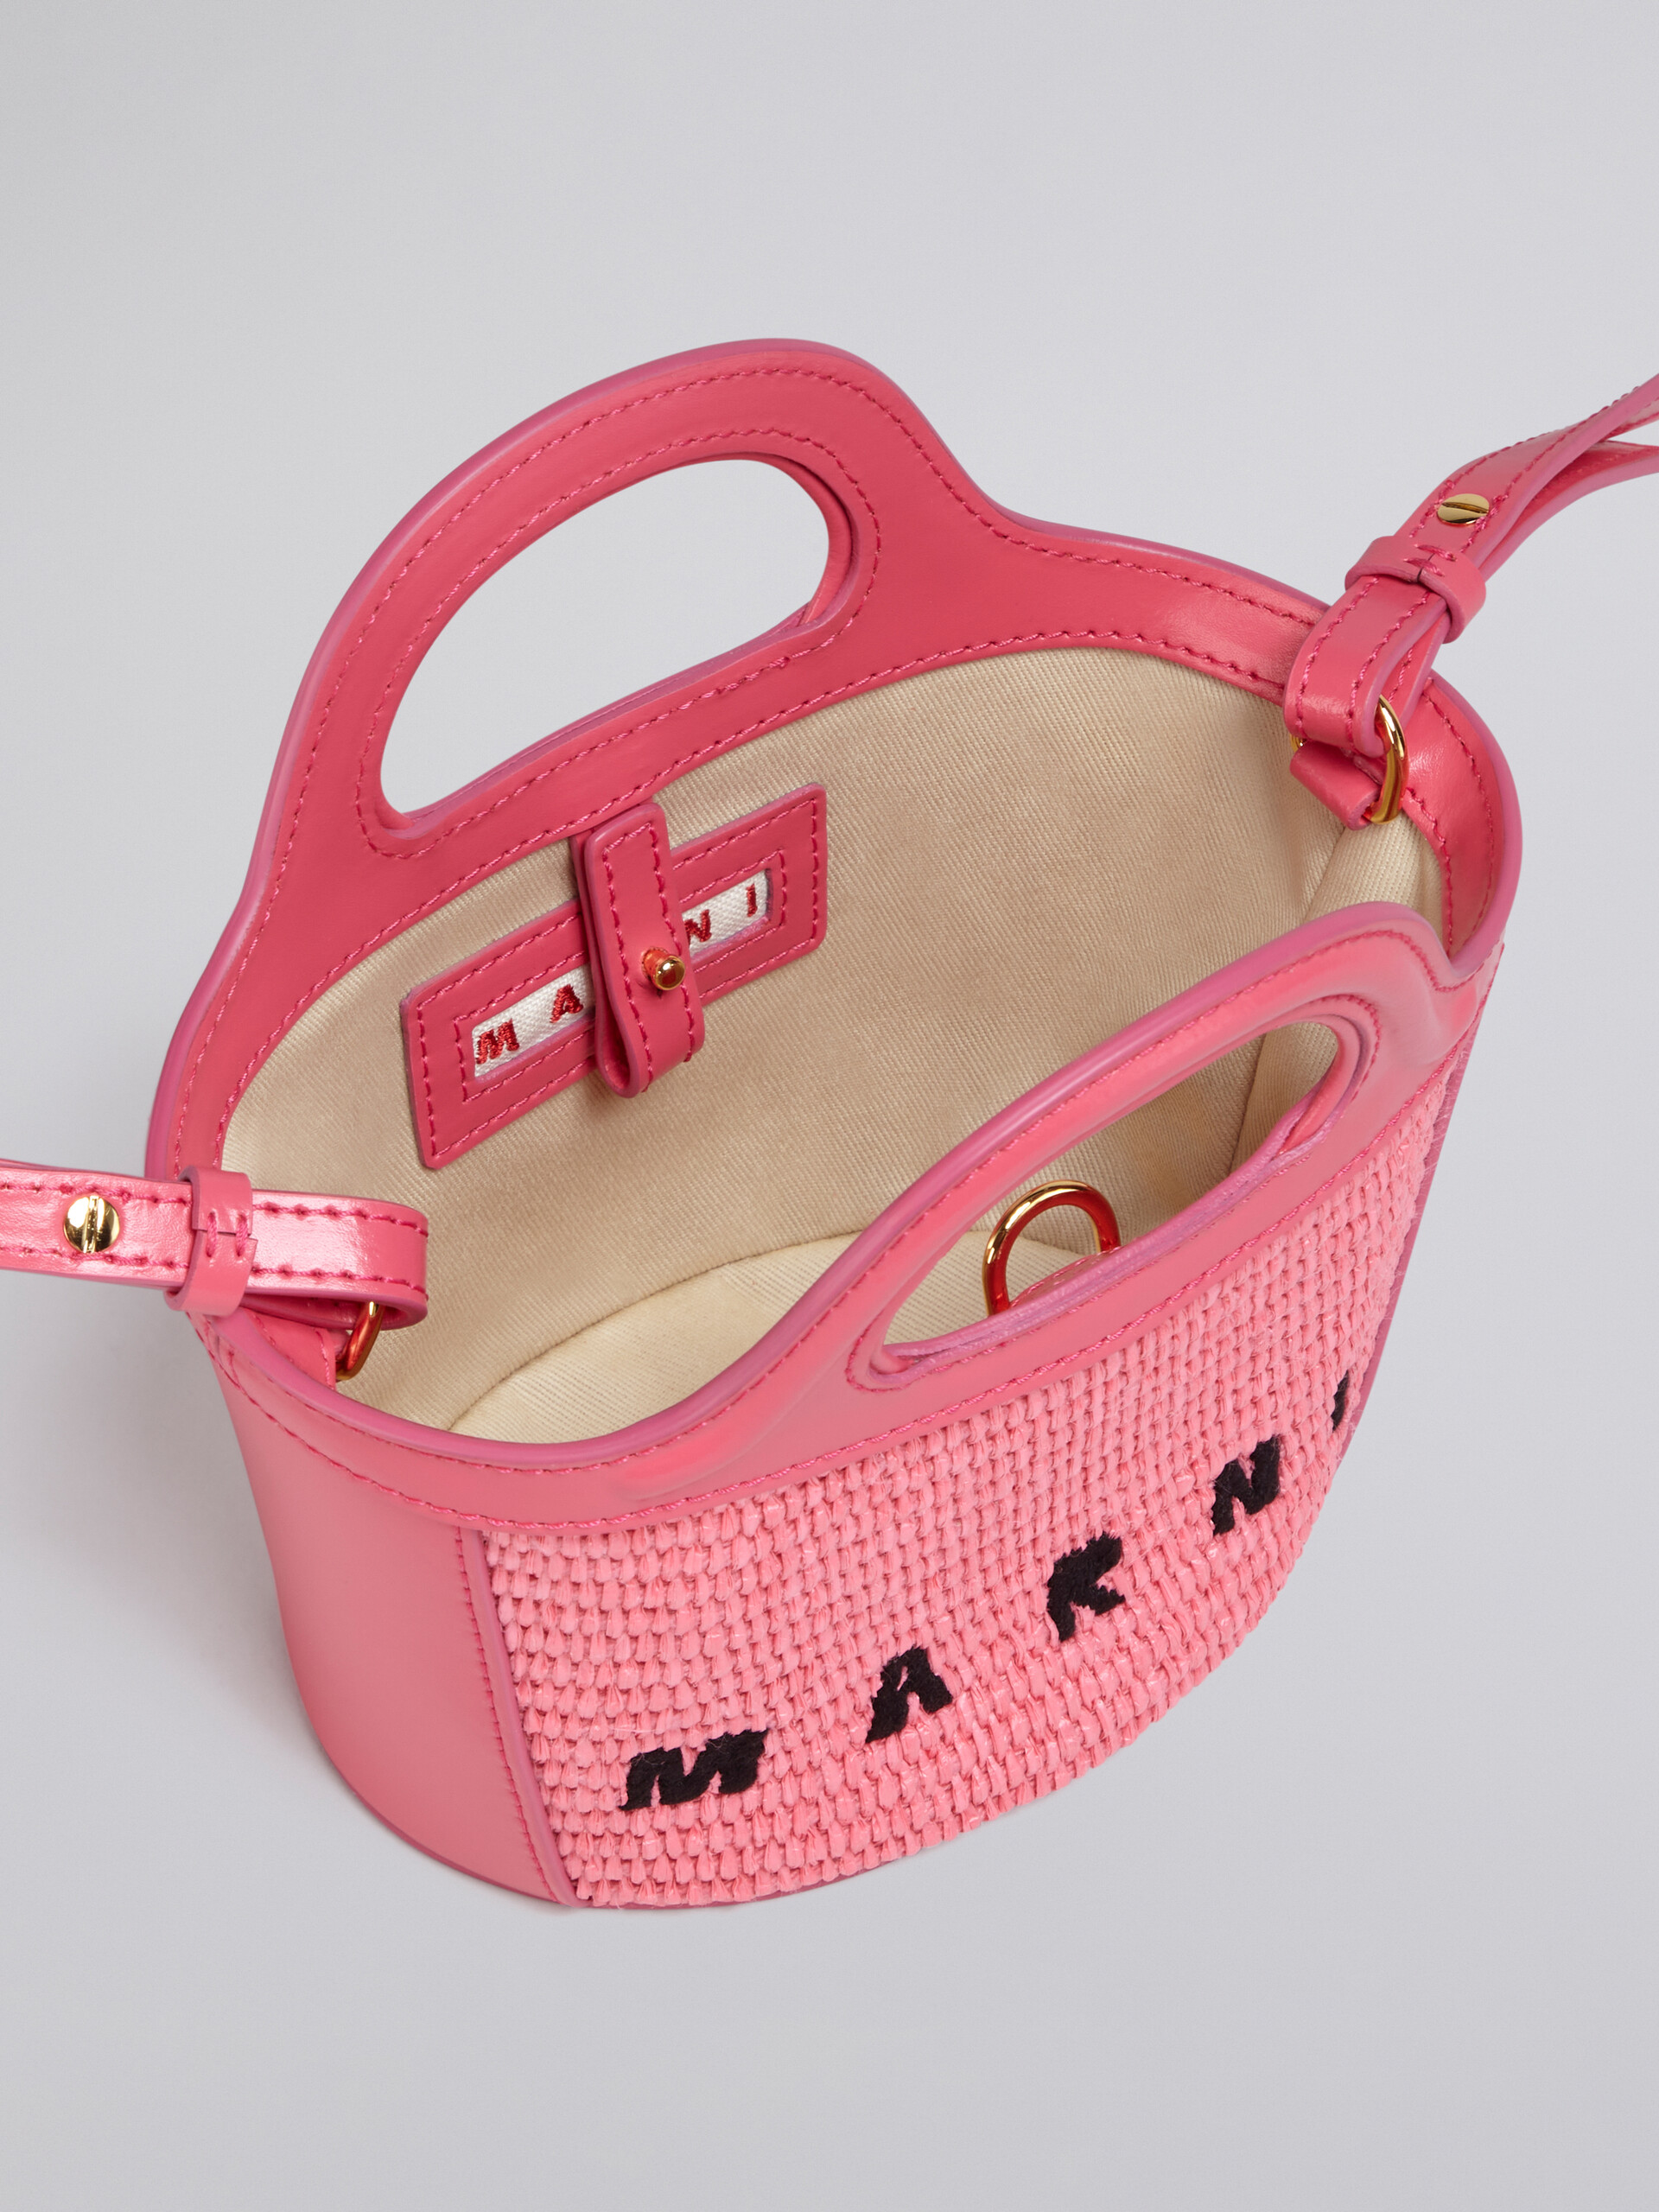 TROPICALIA micro bag in pink leather and raffia - Handbags - Image 4